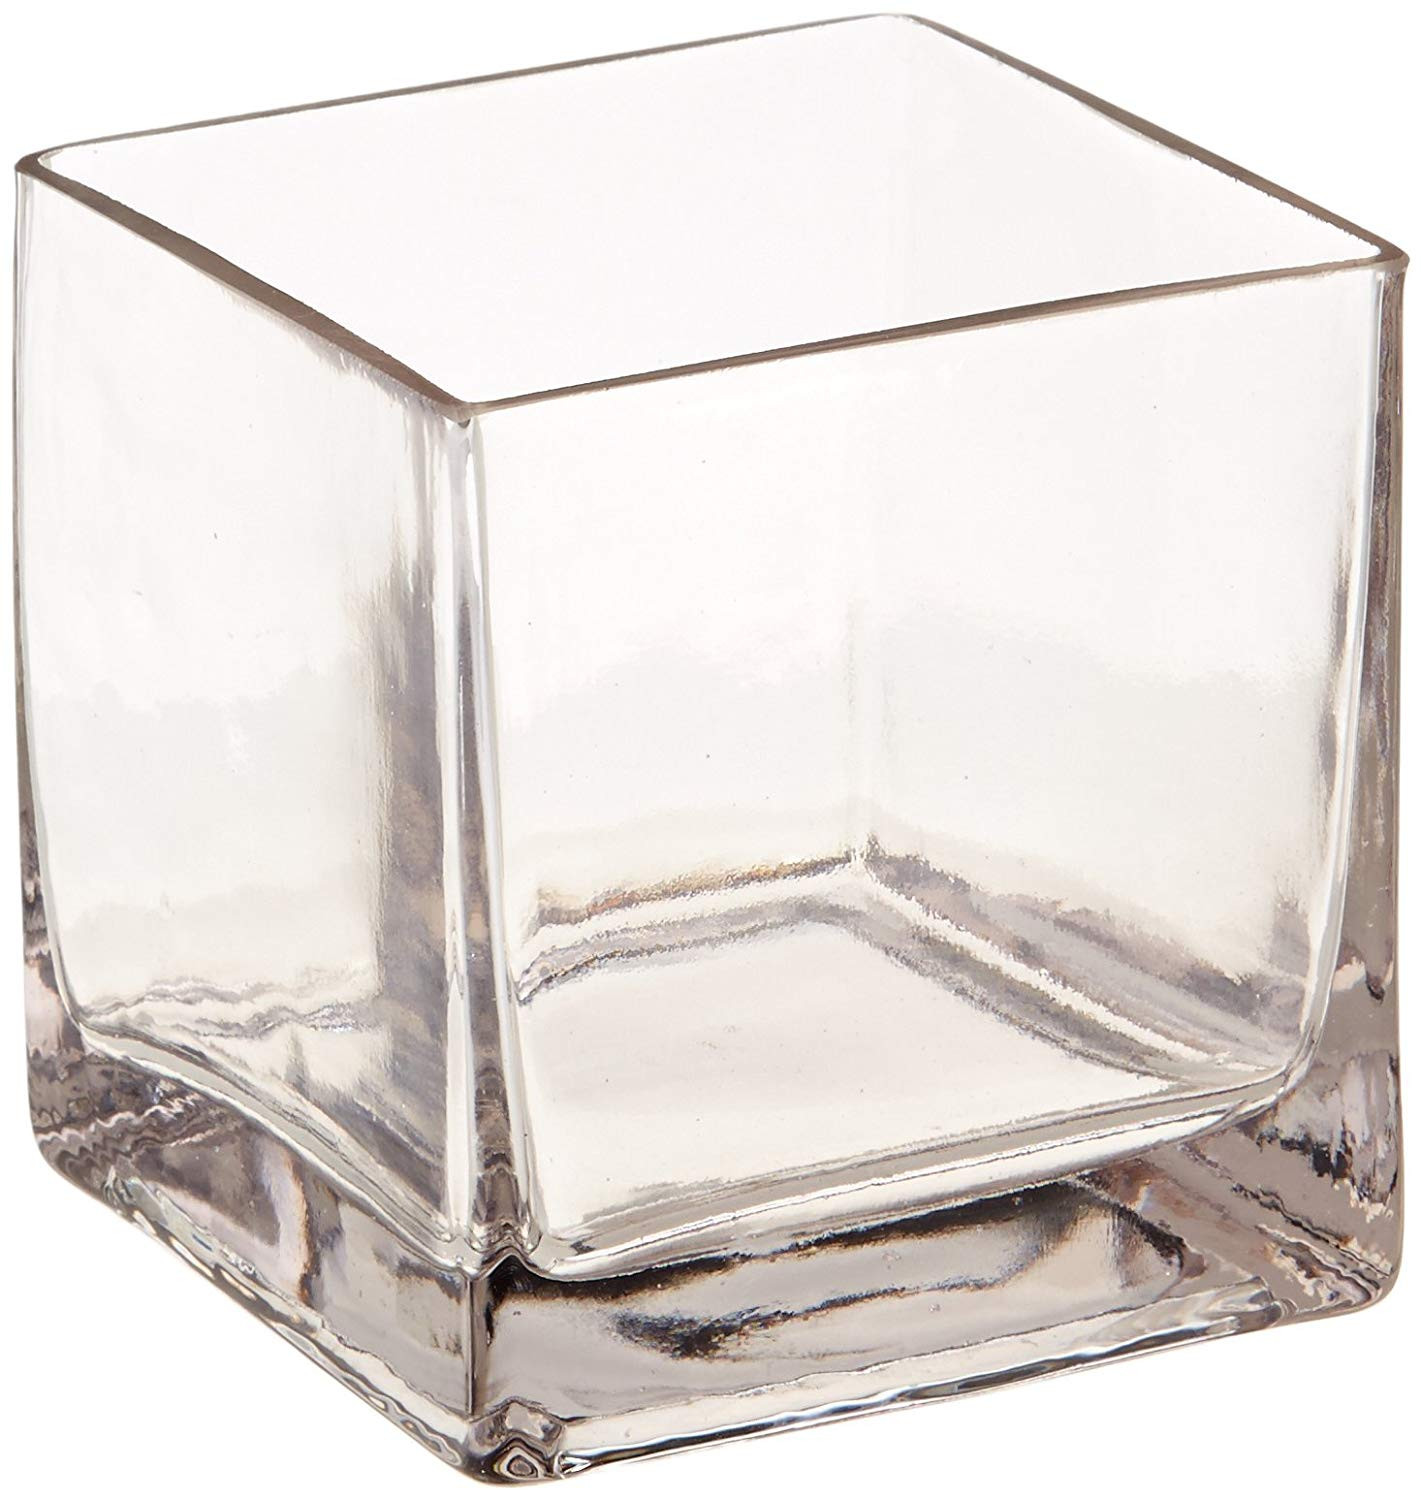 23 Famous Clear Glass Bubble Bowl Vase 2024 free download clear glass bubble bowl vase of amazon com 12piece 4 square crystal clear glass vase home kitchen regarding 71 jezfmvnl sl1500